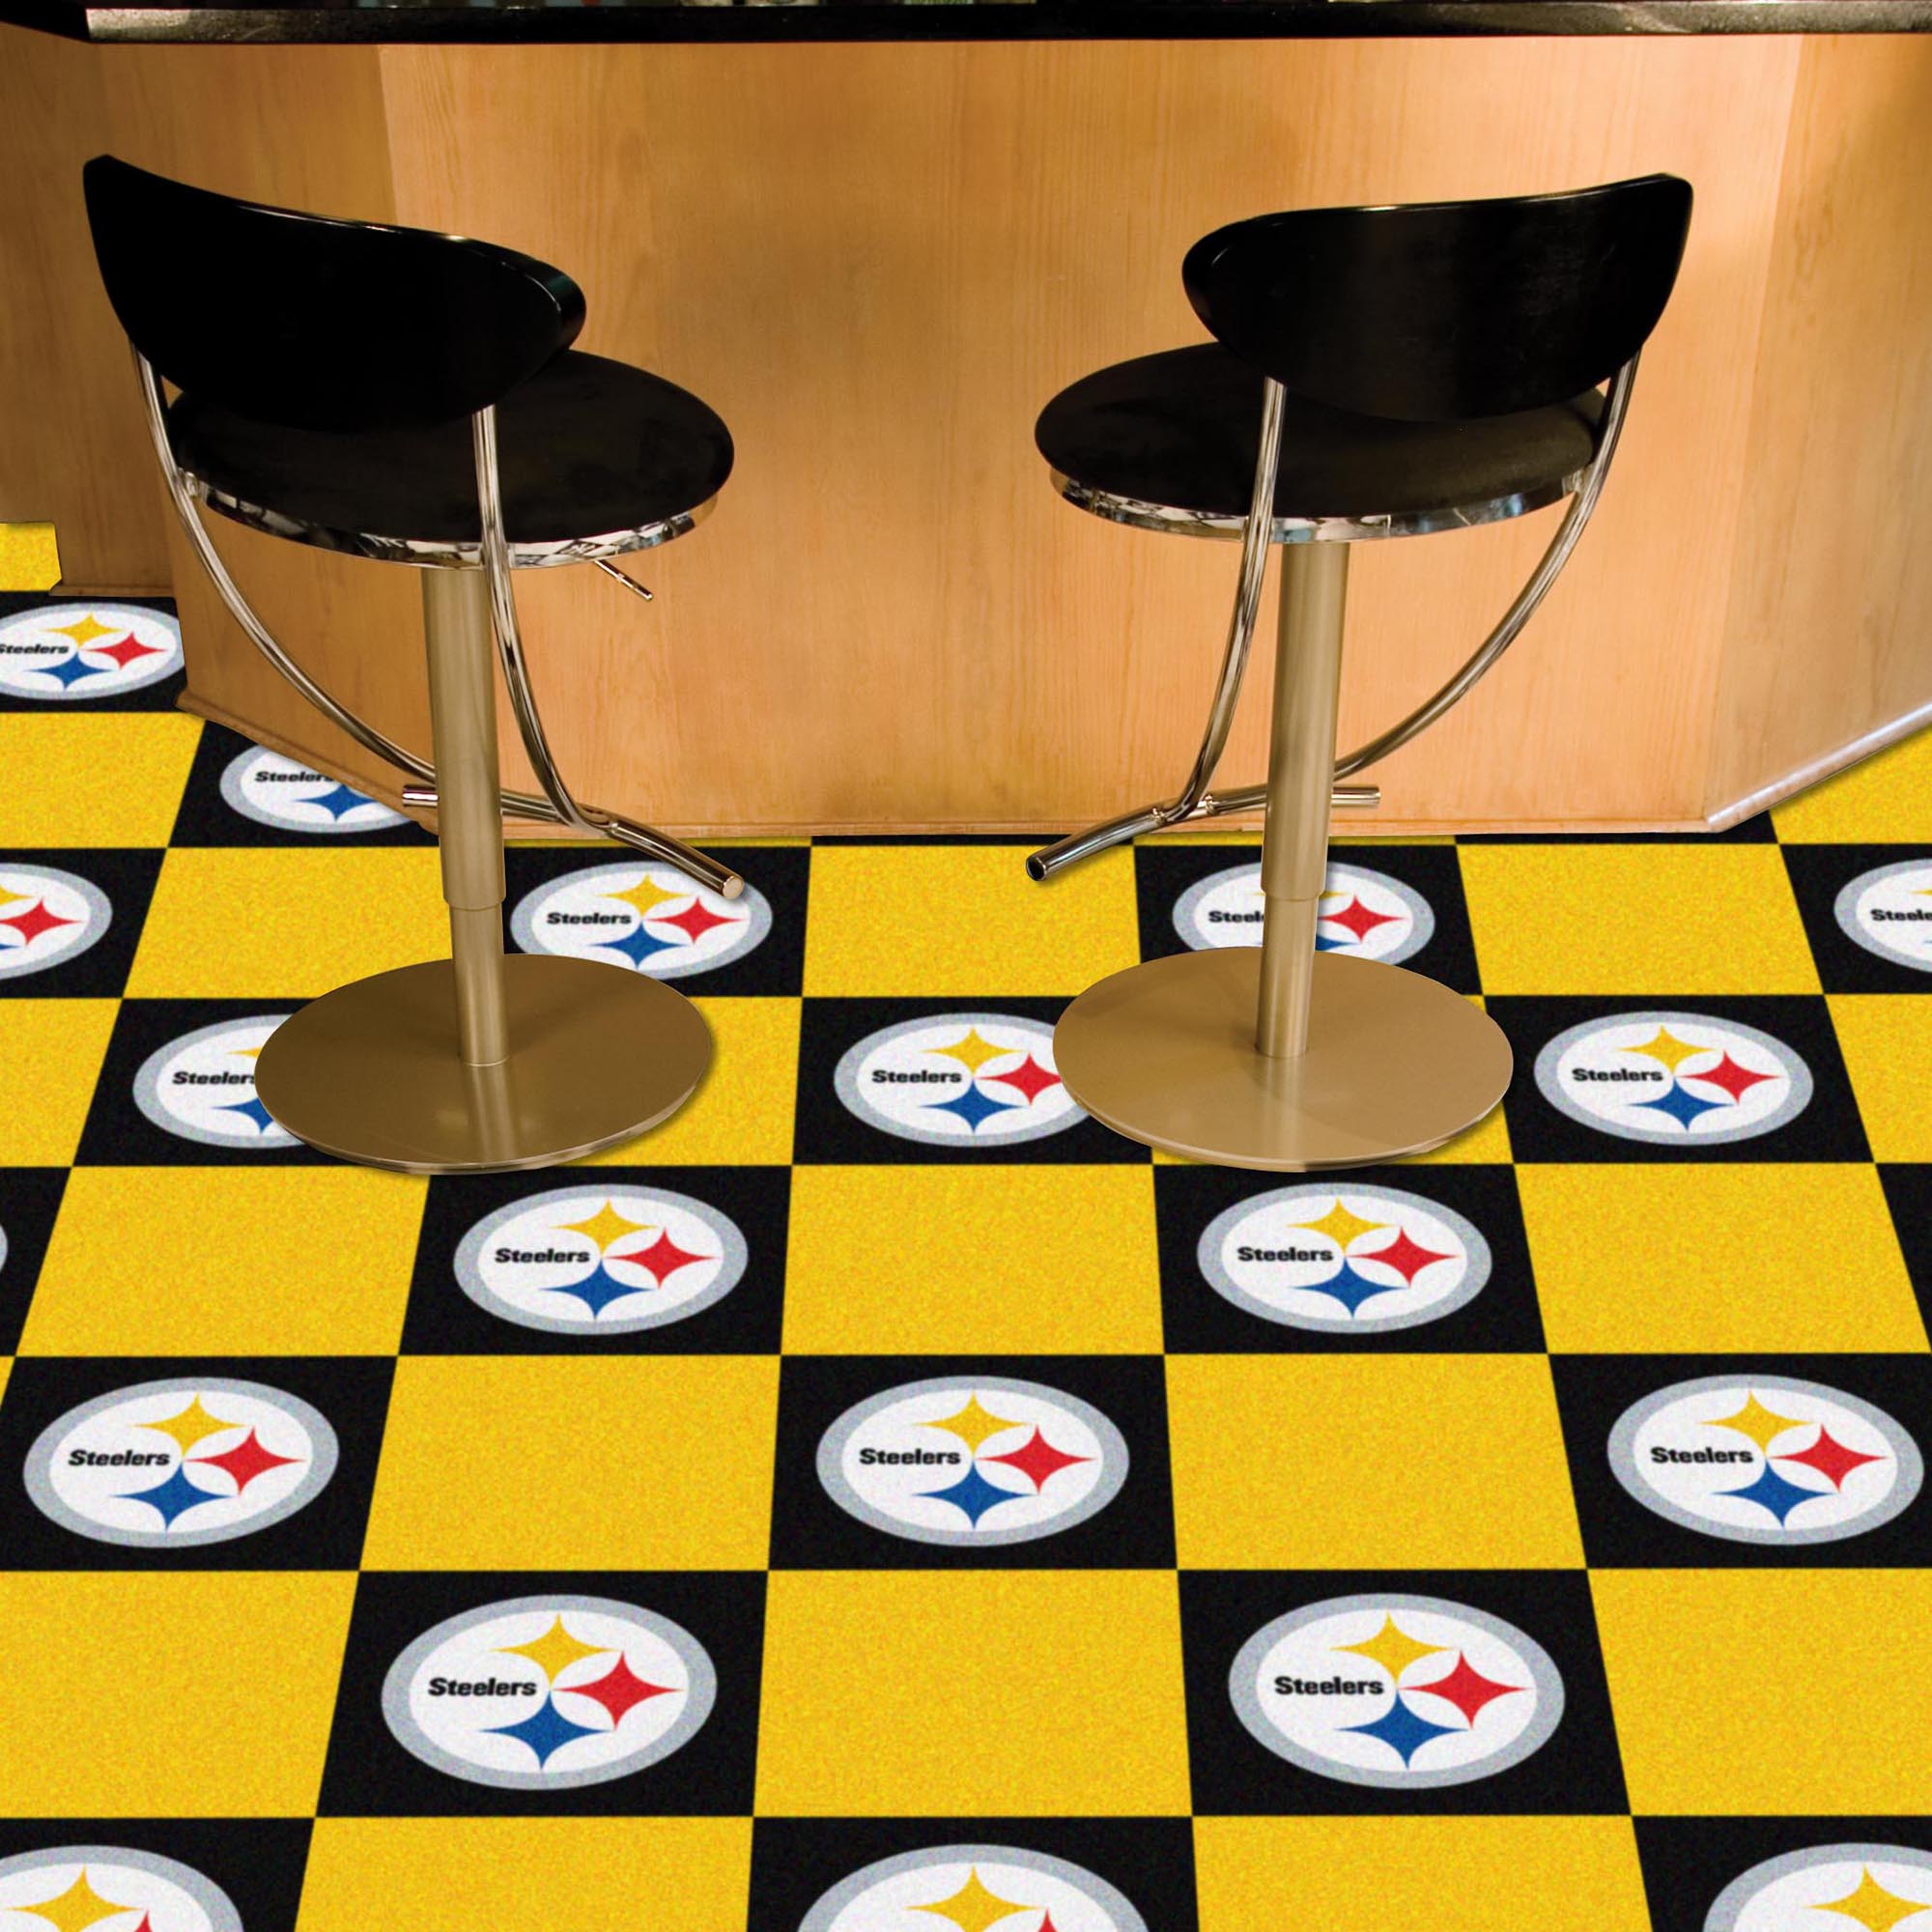 Steelers Team Carpet Tiles - 45 sq ft